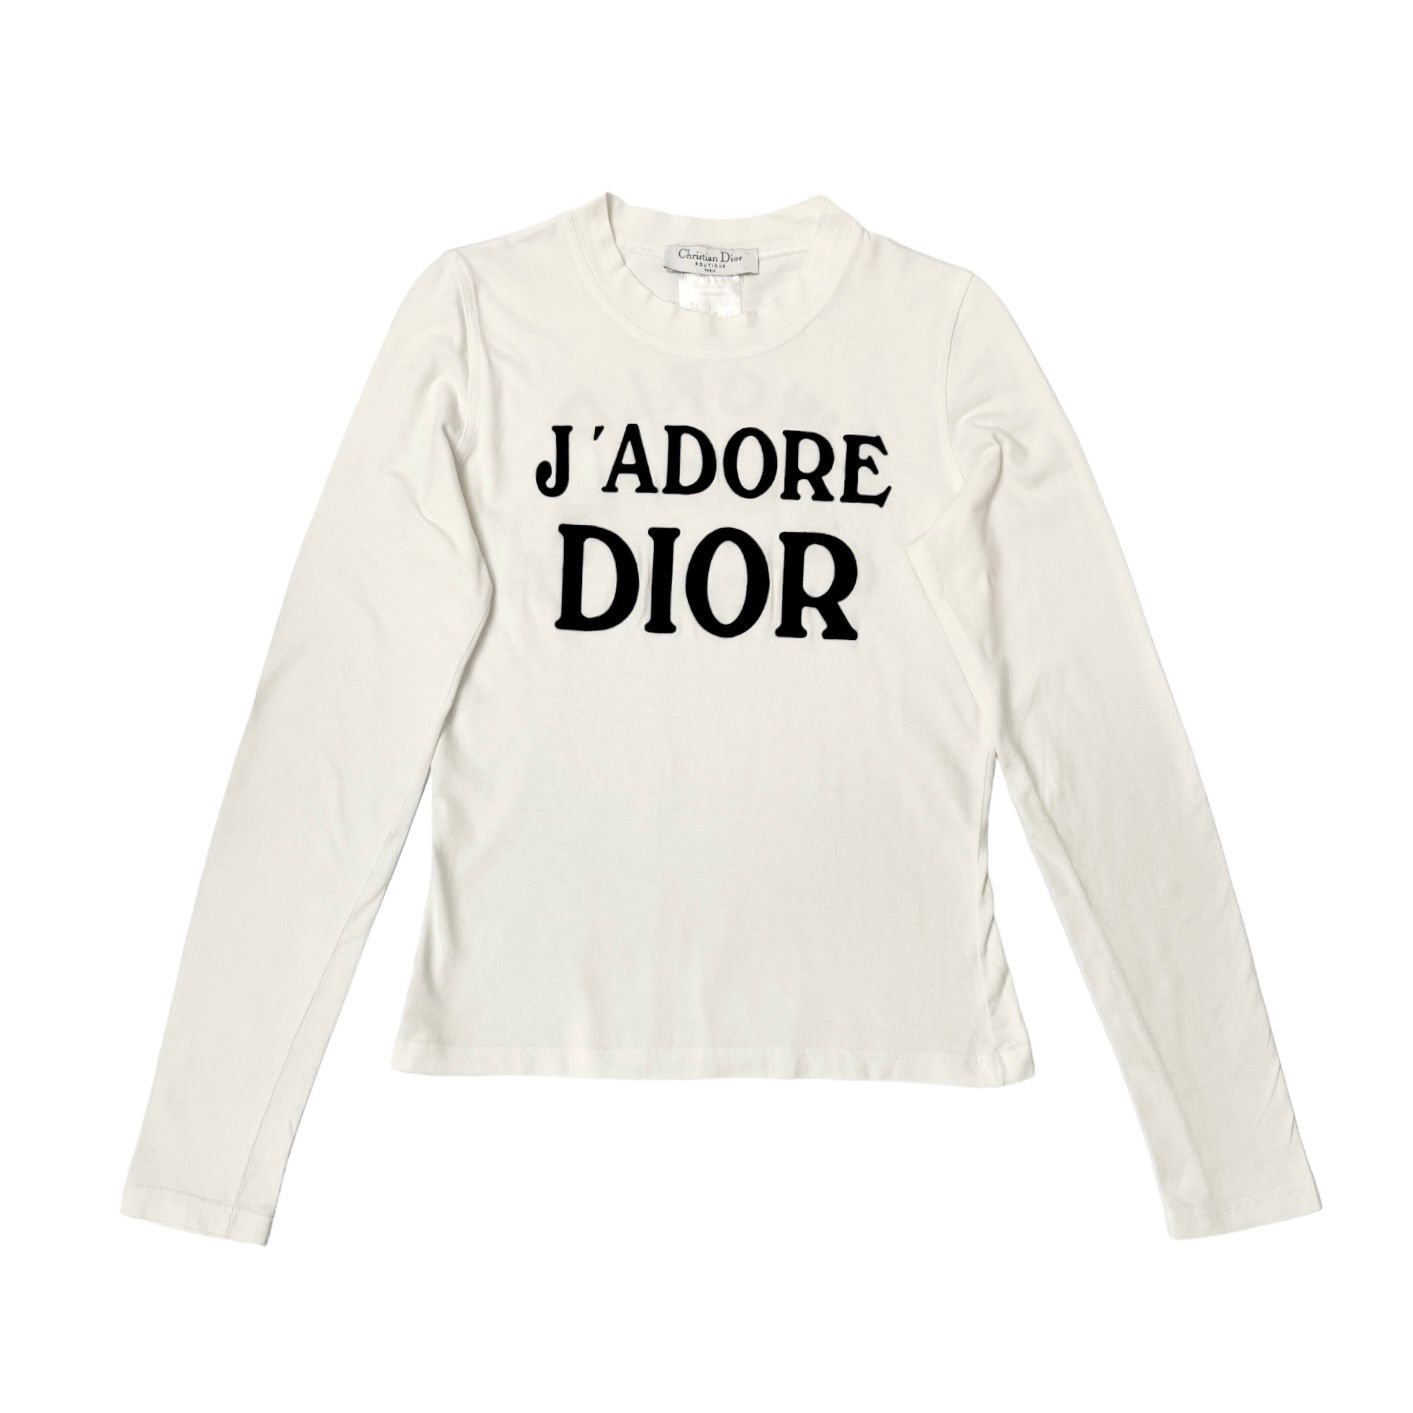 Dior J'Adore White Long Sleeve Top